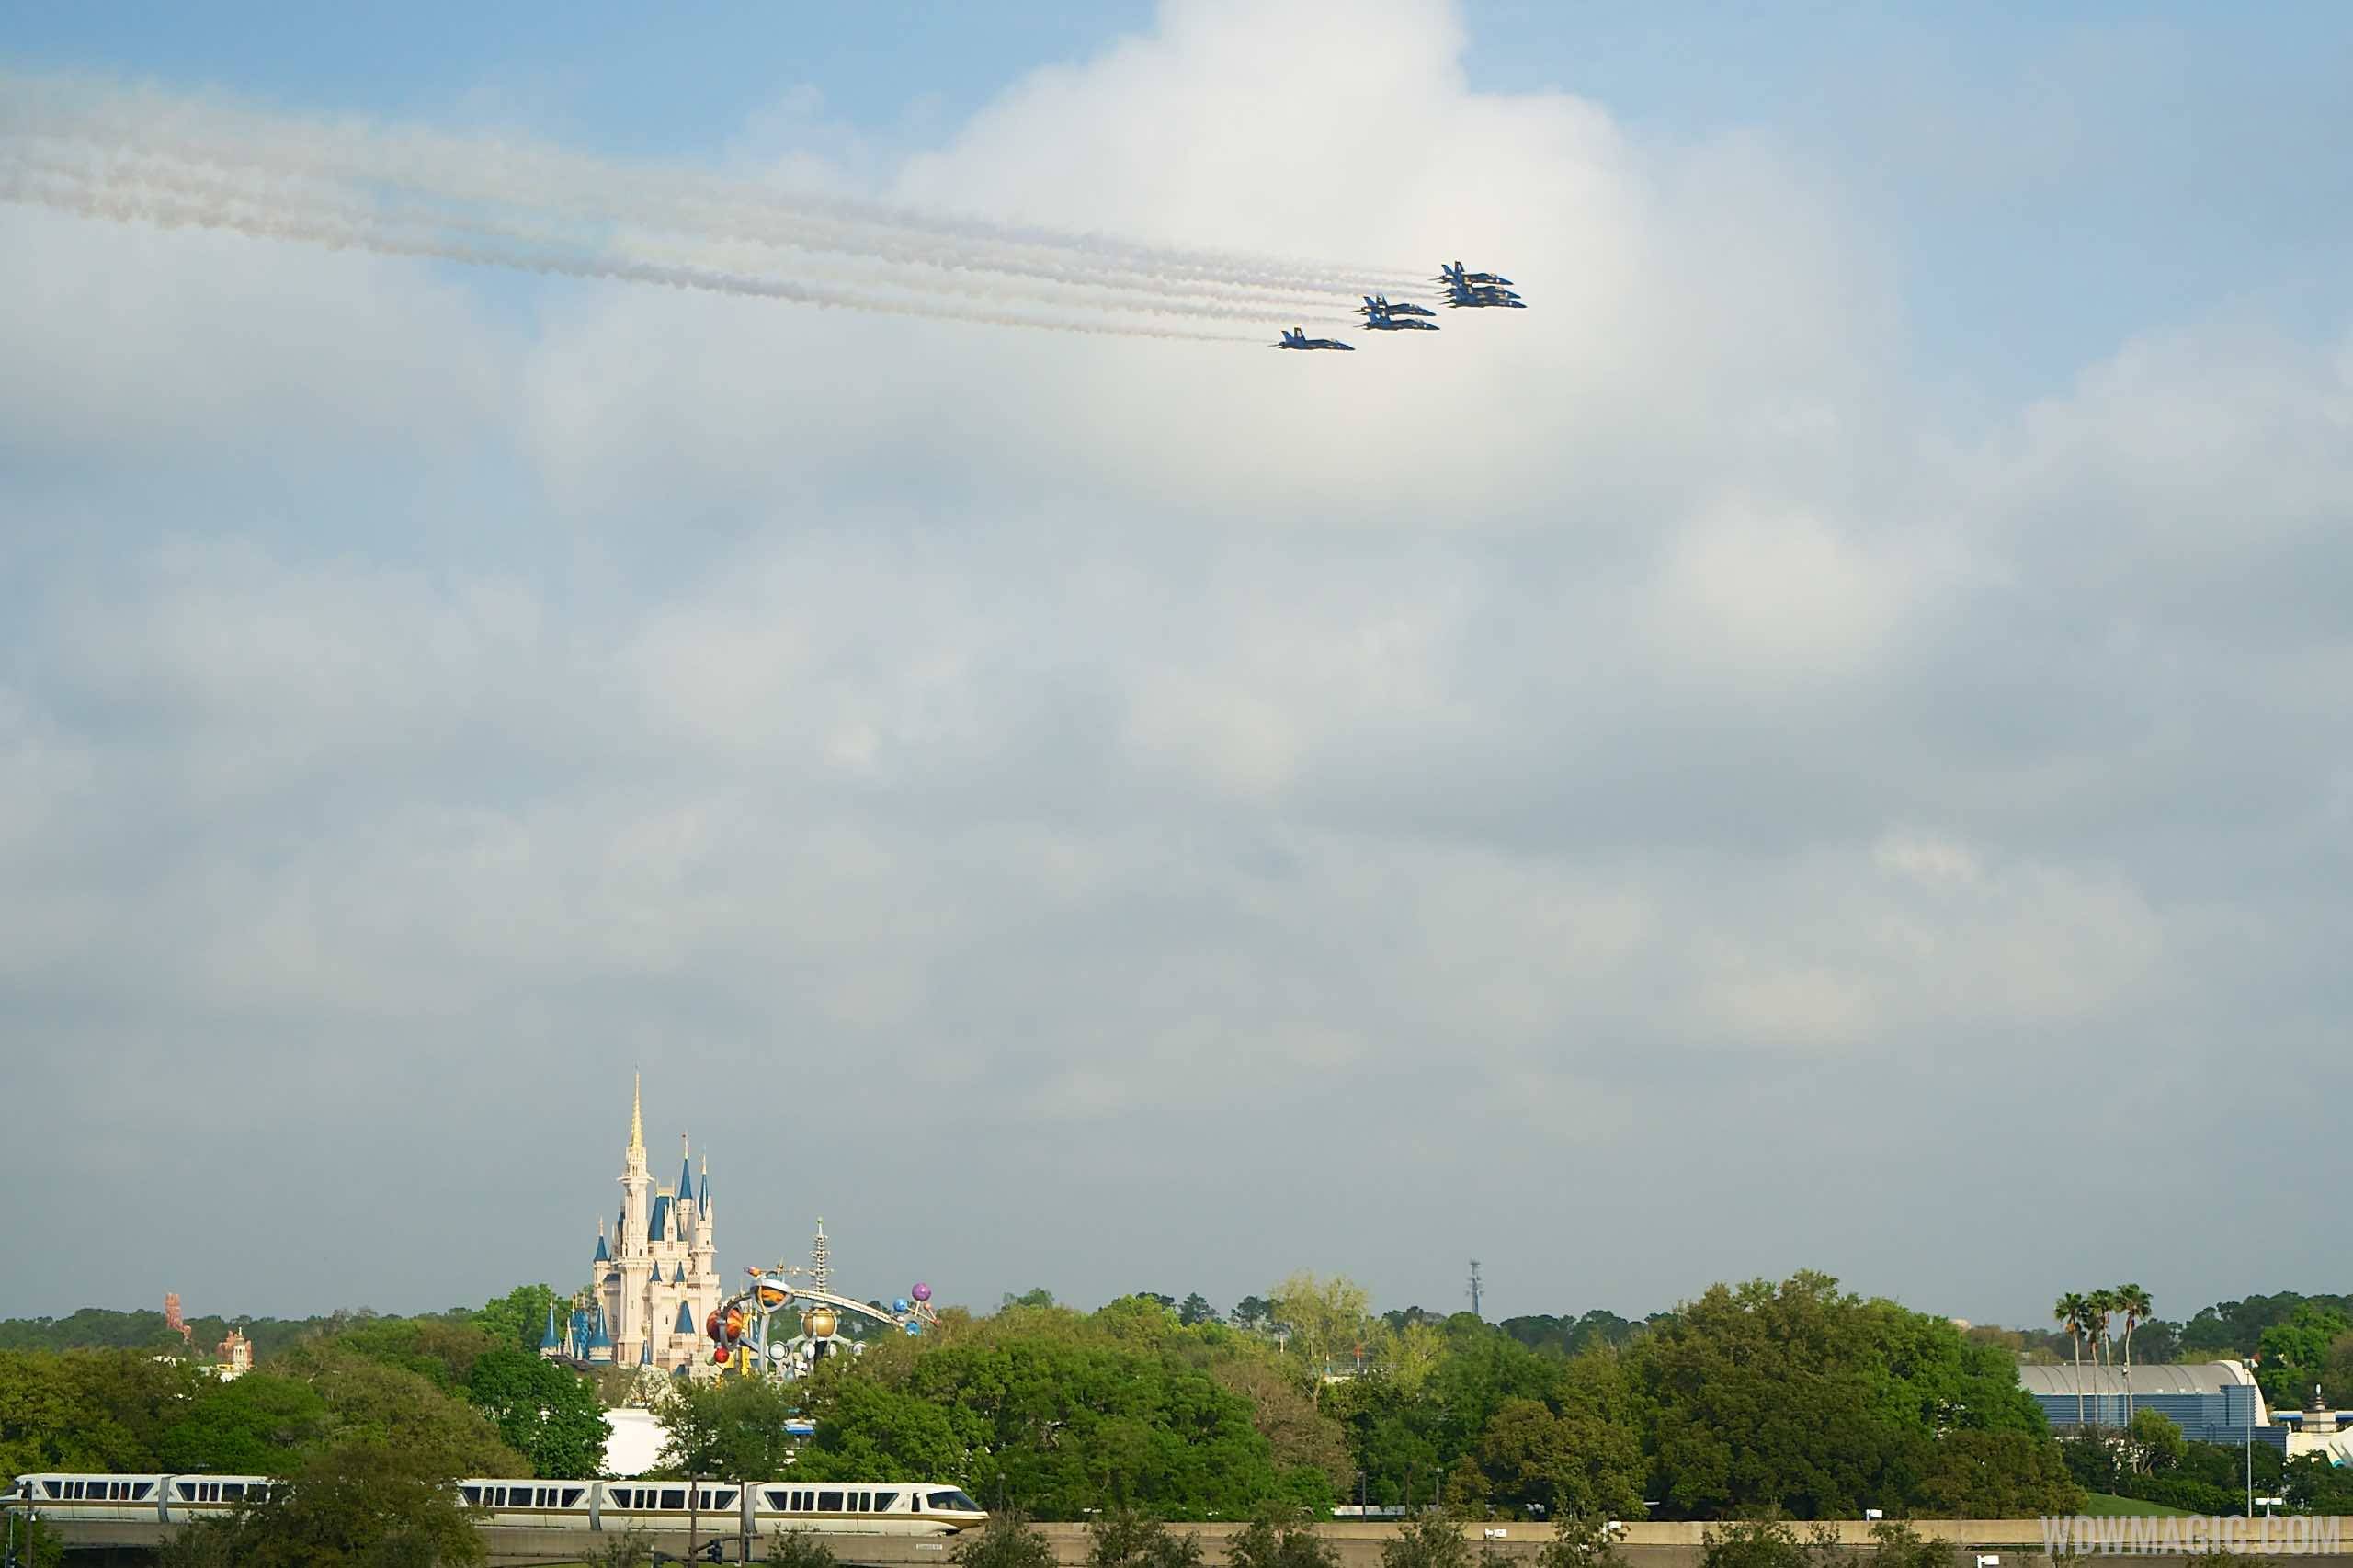 U.S. Navy Blue Angels to flyover the Magic Kingdom next week